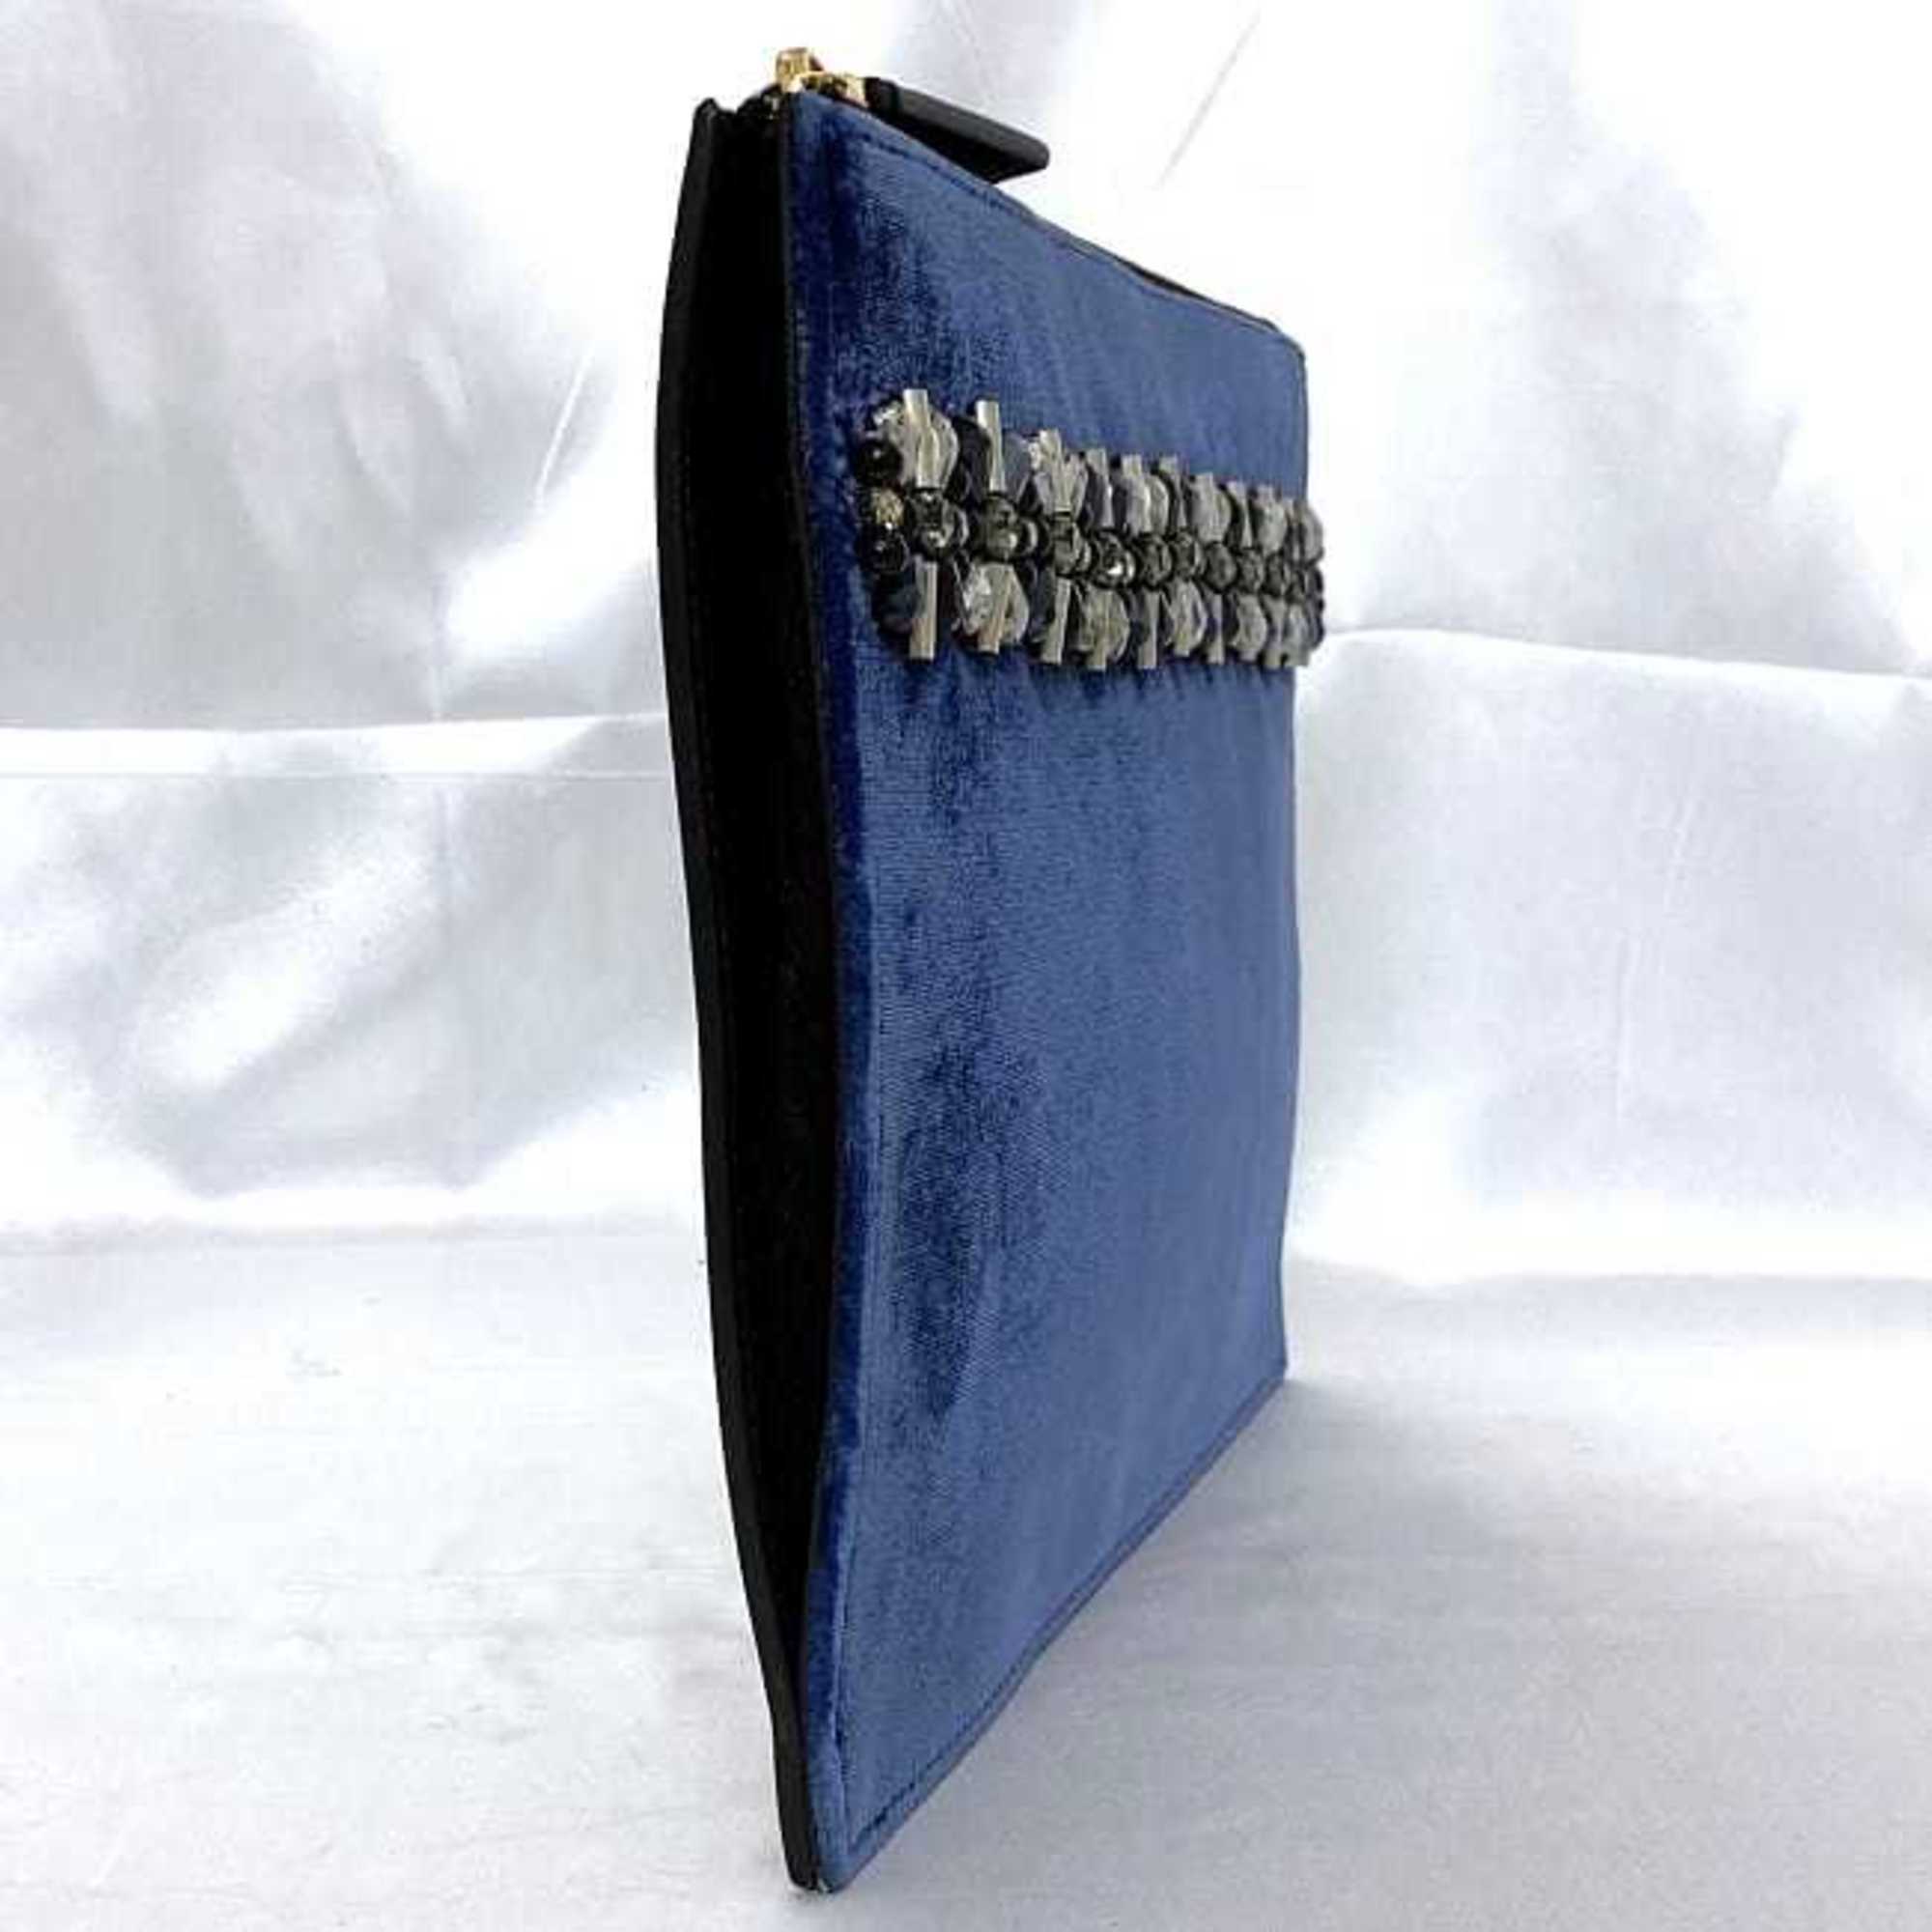 Marni Clutch Bag Blue Black ec-20313 Beads Pouch Velvet Leather Rhinestone MARNI Stones Women's